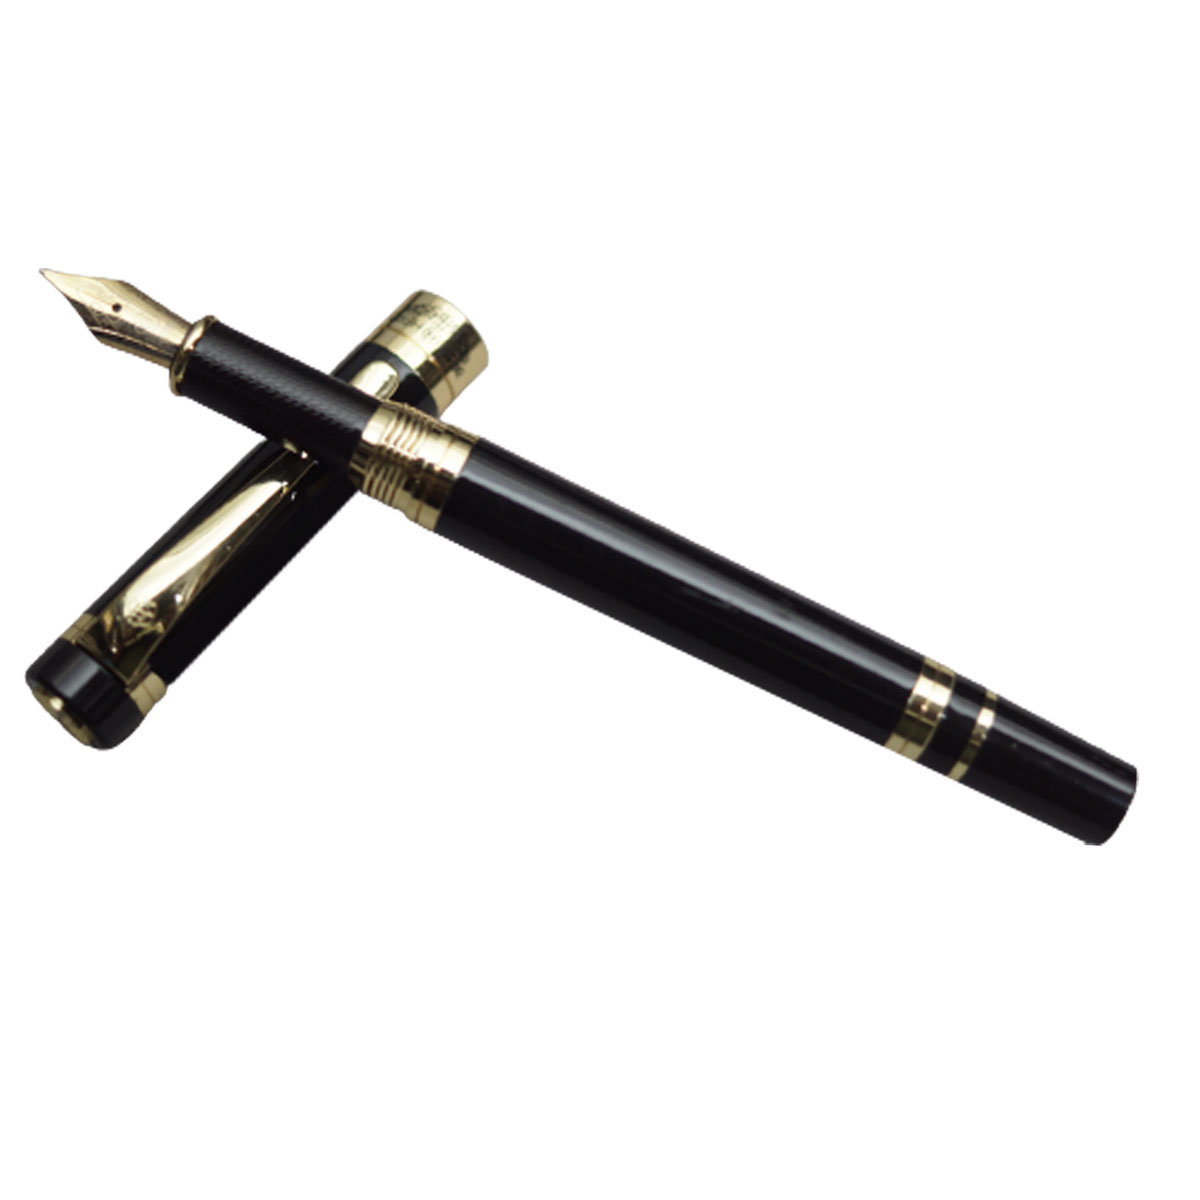 Hero 975 Black Body and Cap Fine Goild Nib with Gold Trims Converter Type Fountain pen SKU 20235